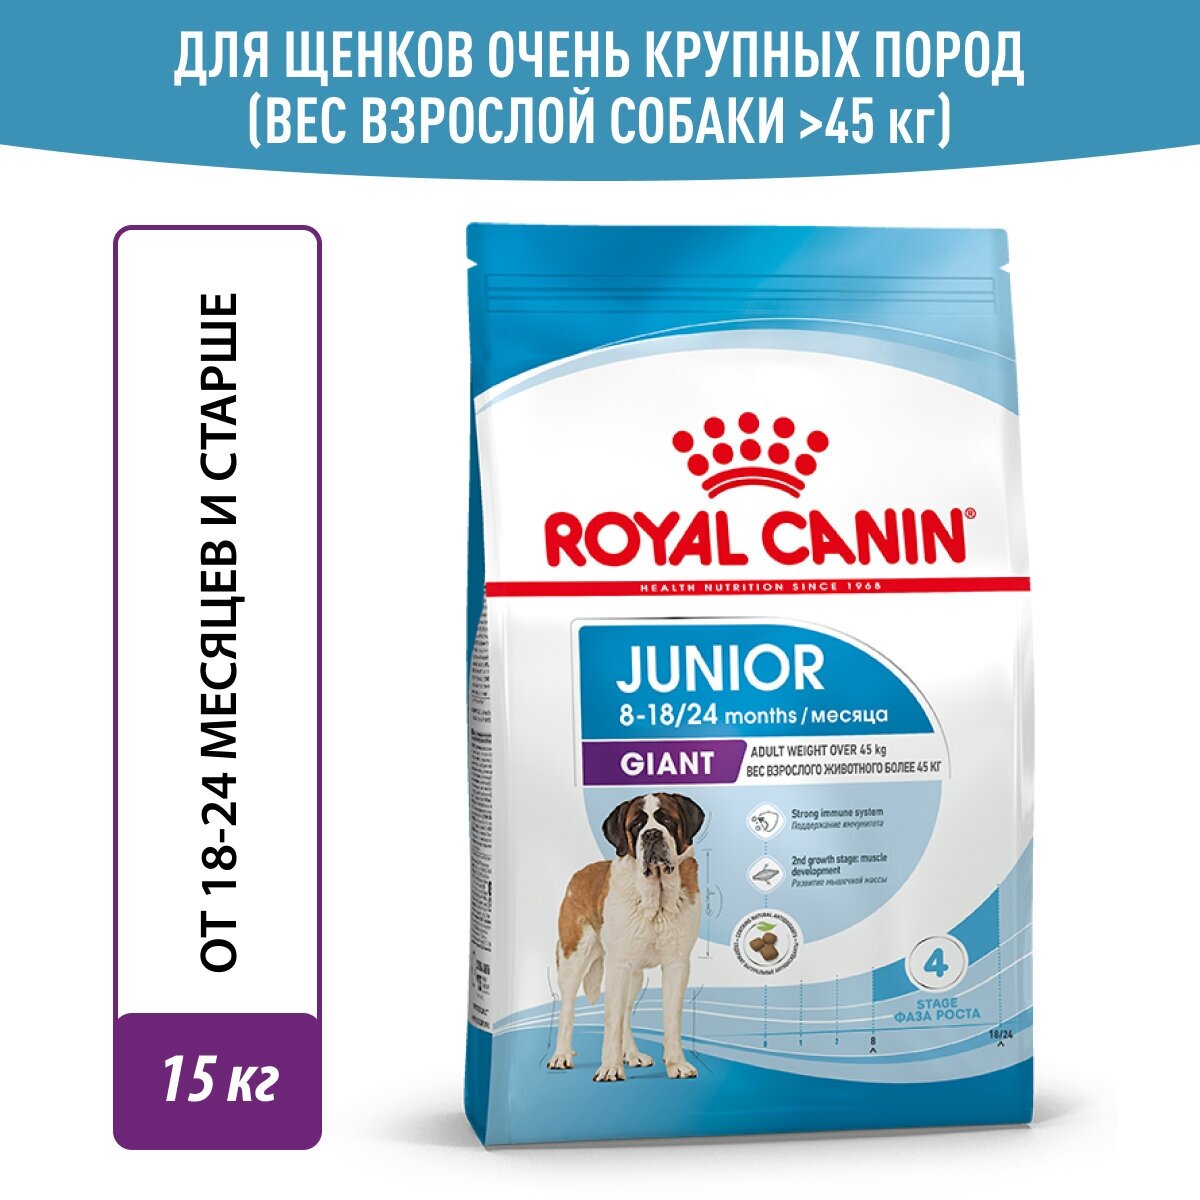 Сухой корм Royal Canin для щенков гигантских пород, 15кг - фото №1